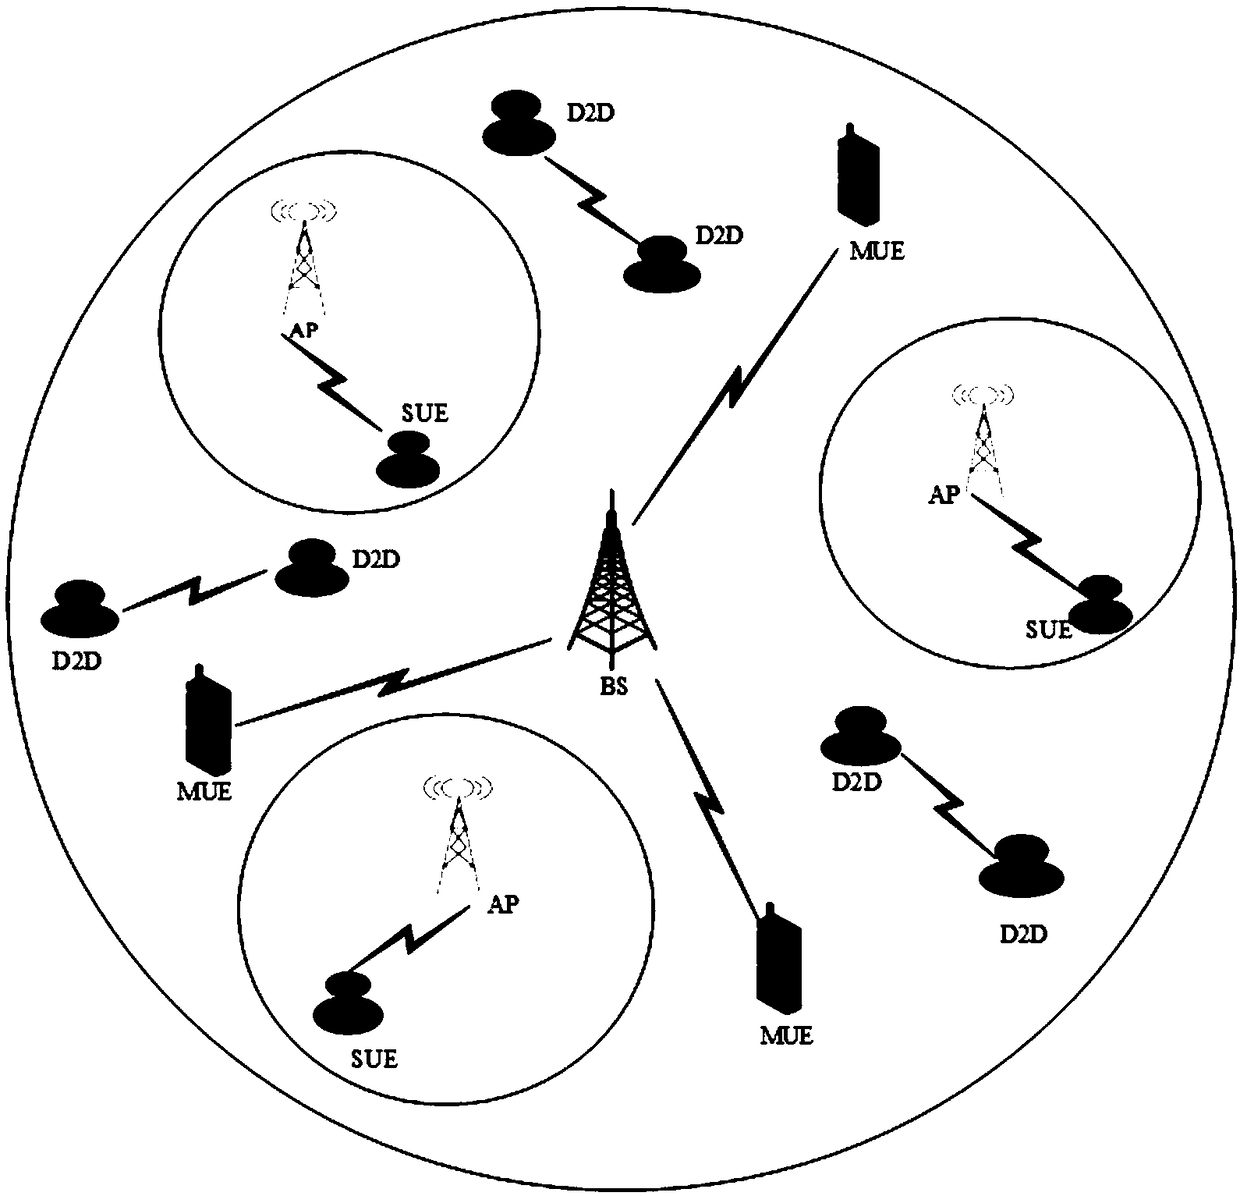 Multilayer heterogeneous network spectrum resource allocation method based on combinational auction mechanism